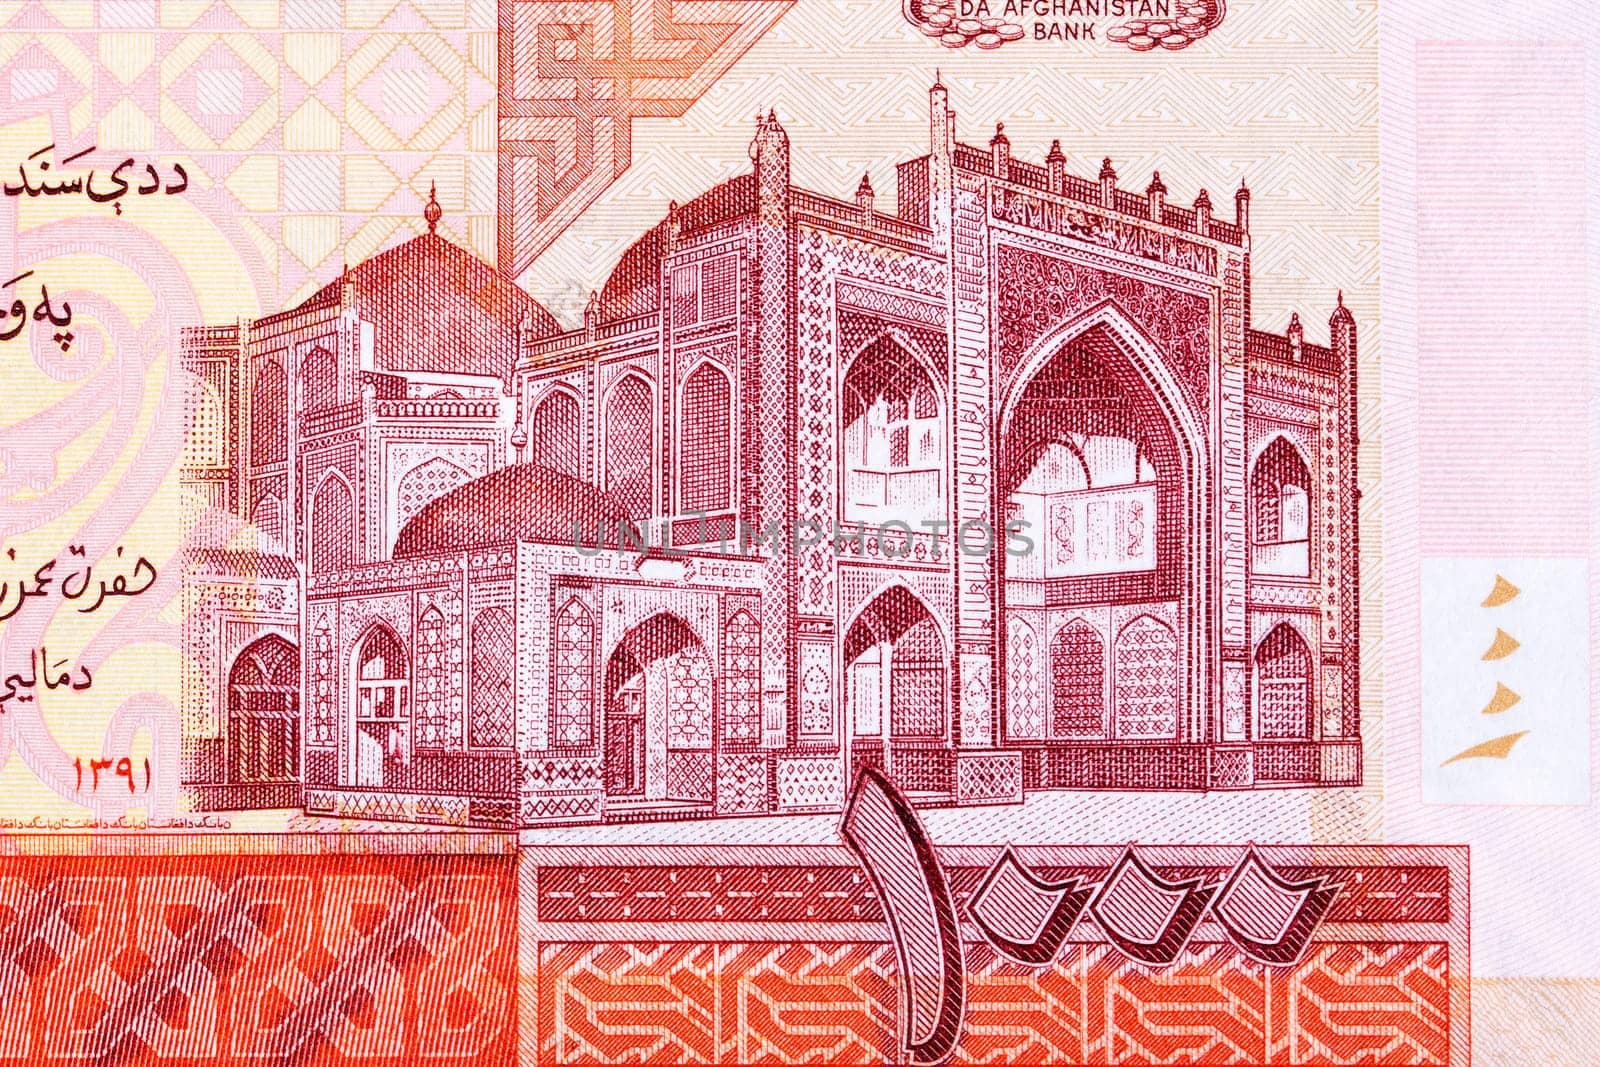 Blue Mosque in Mazari Sharuf from Afghani money by johan10